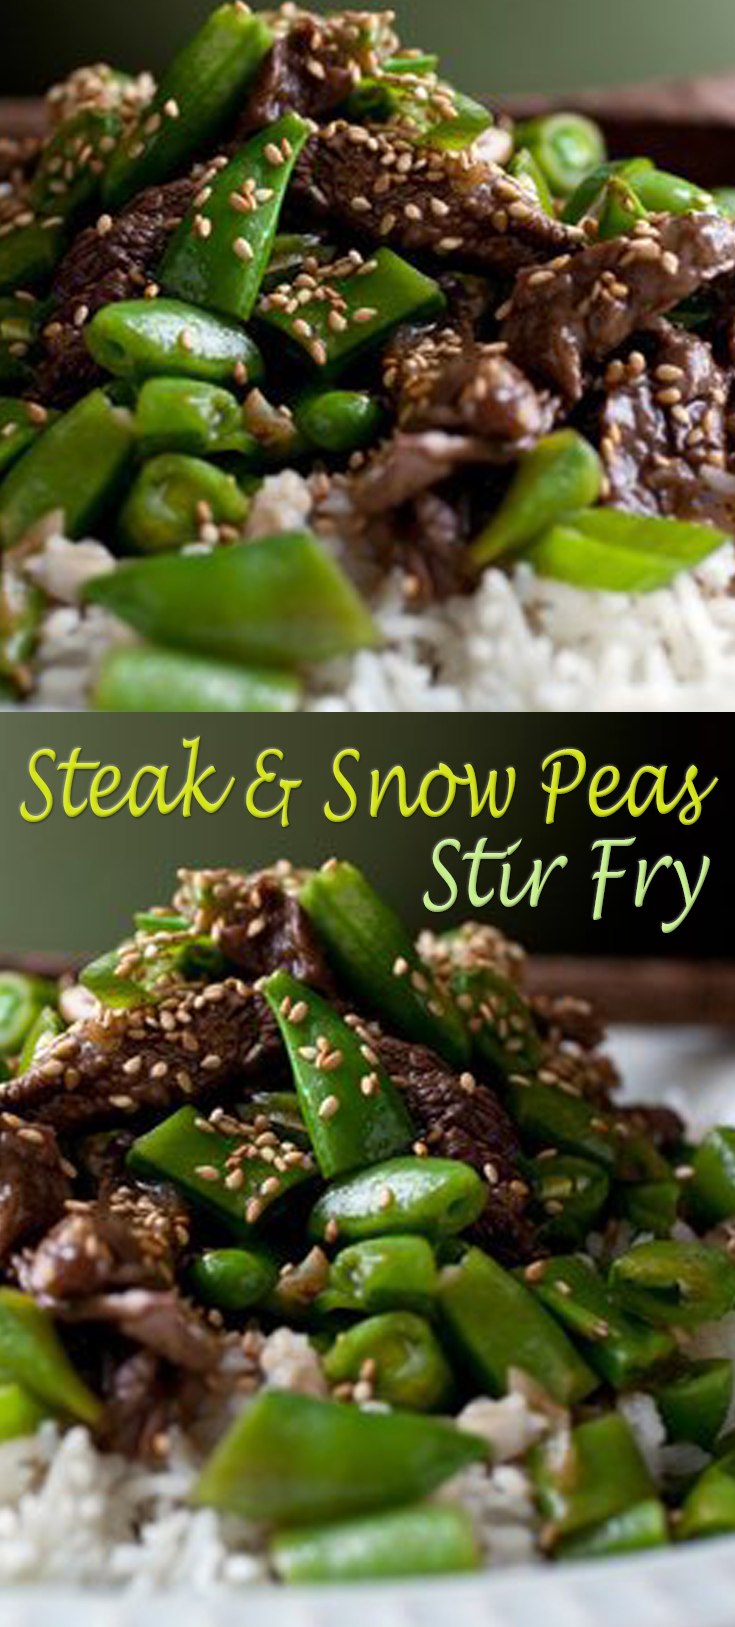 Steak and Snow Peas Stir Fry